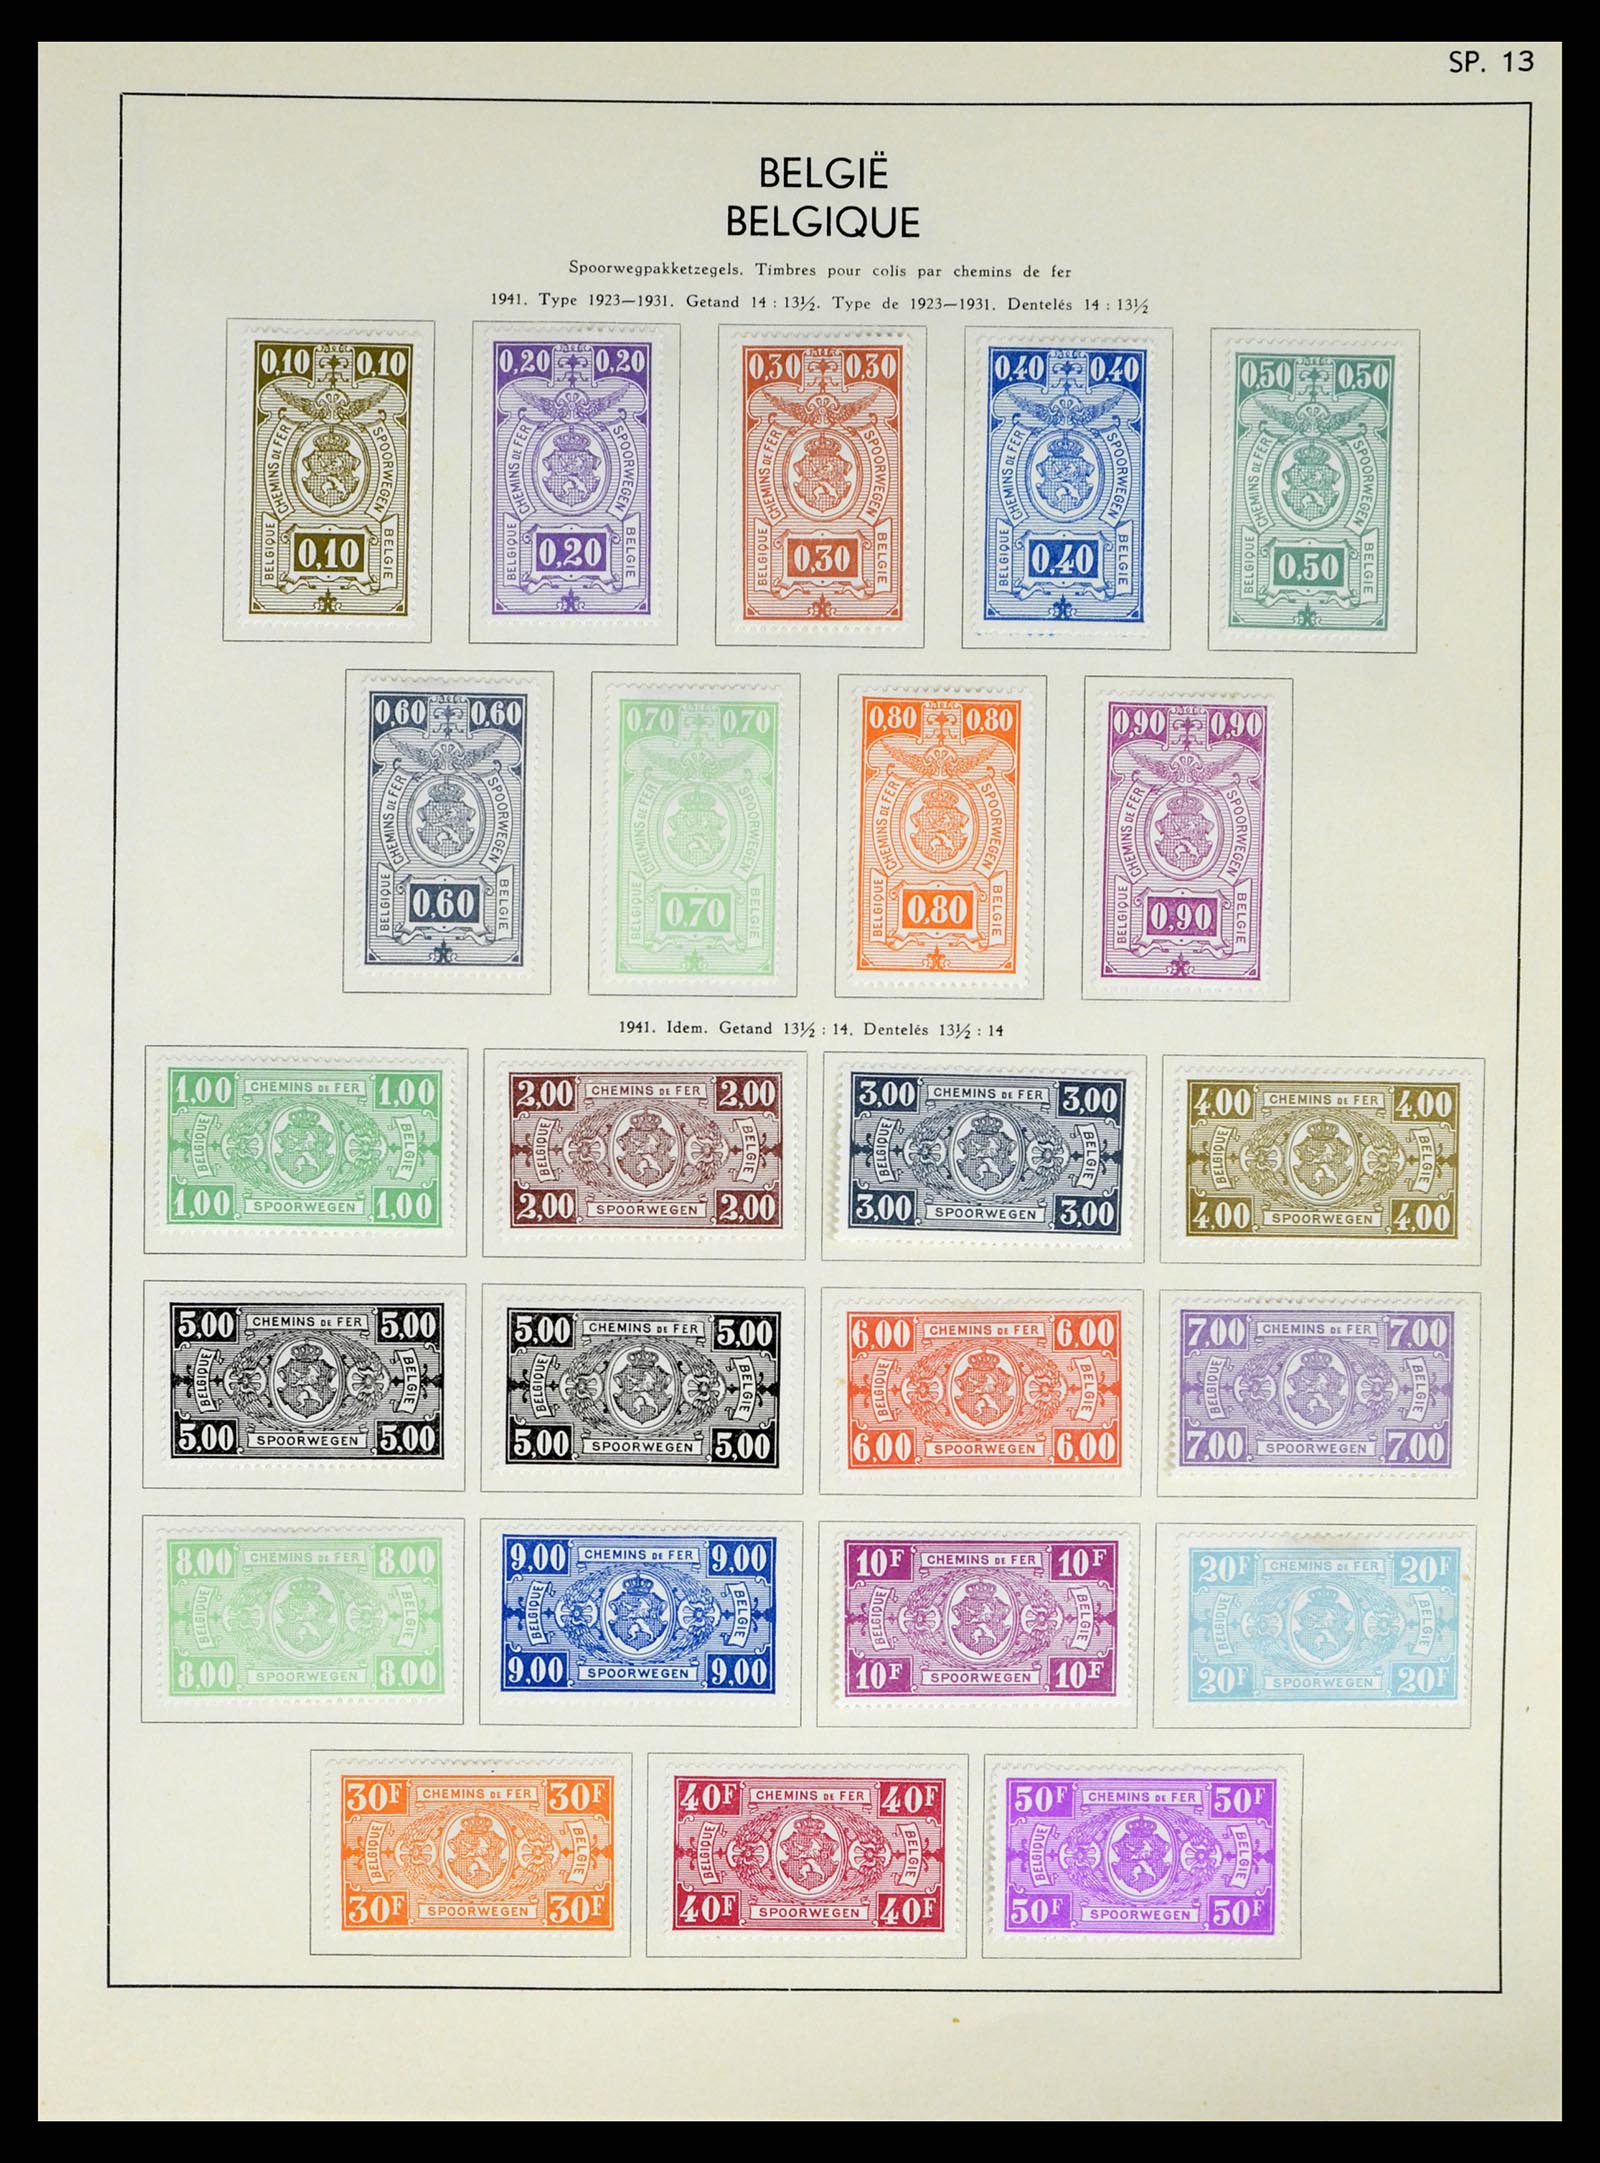 37959 145 - Stamp Collection 37959 Belgium and Belgian Congo 1849-1960.